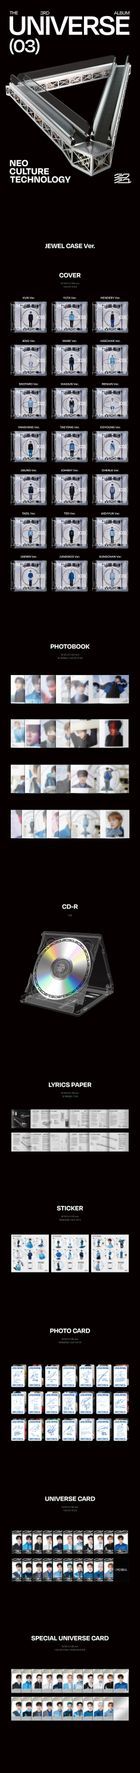 NCT Vol. 3 - Universe (Jewel Case Version) (Hae Chan Version)